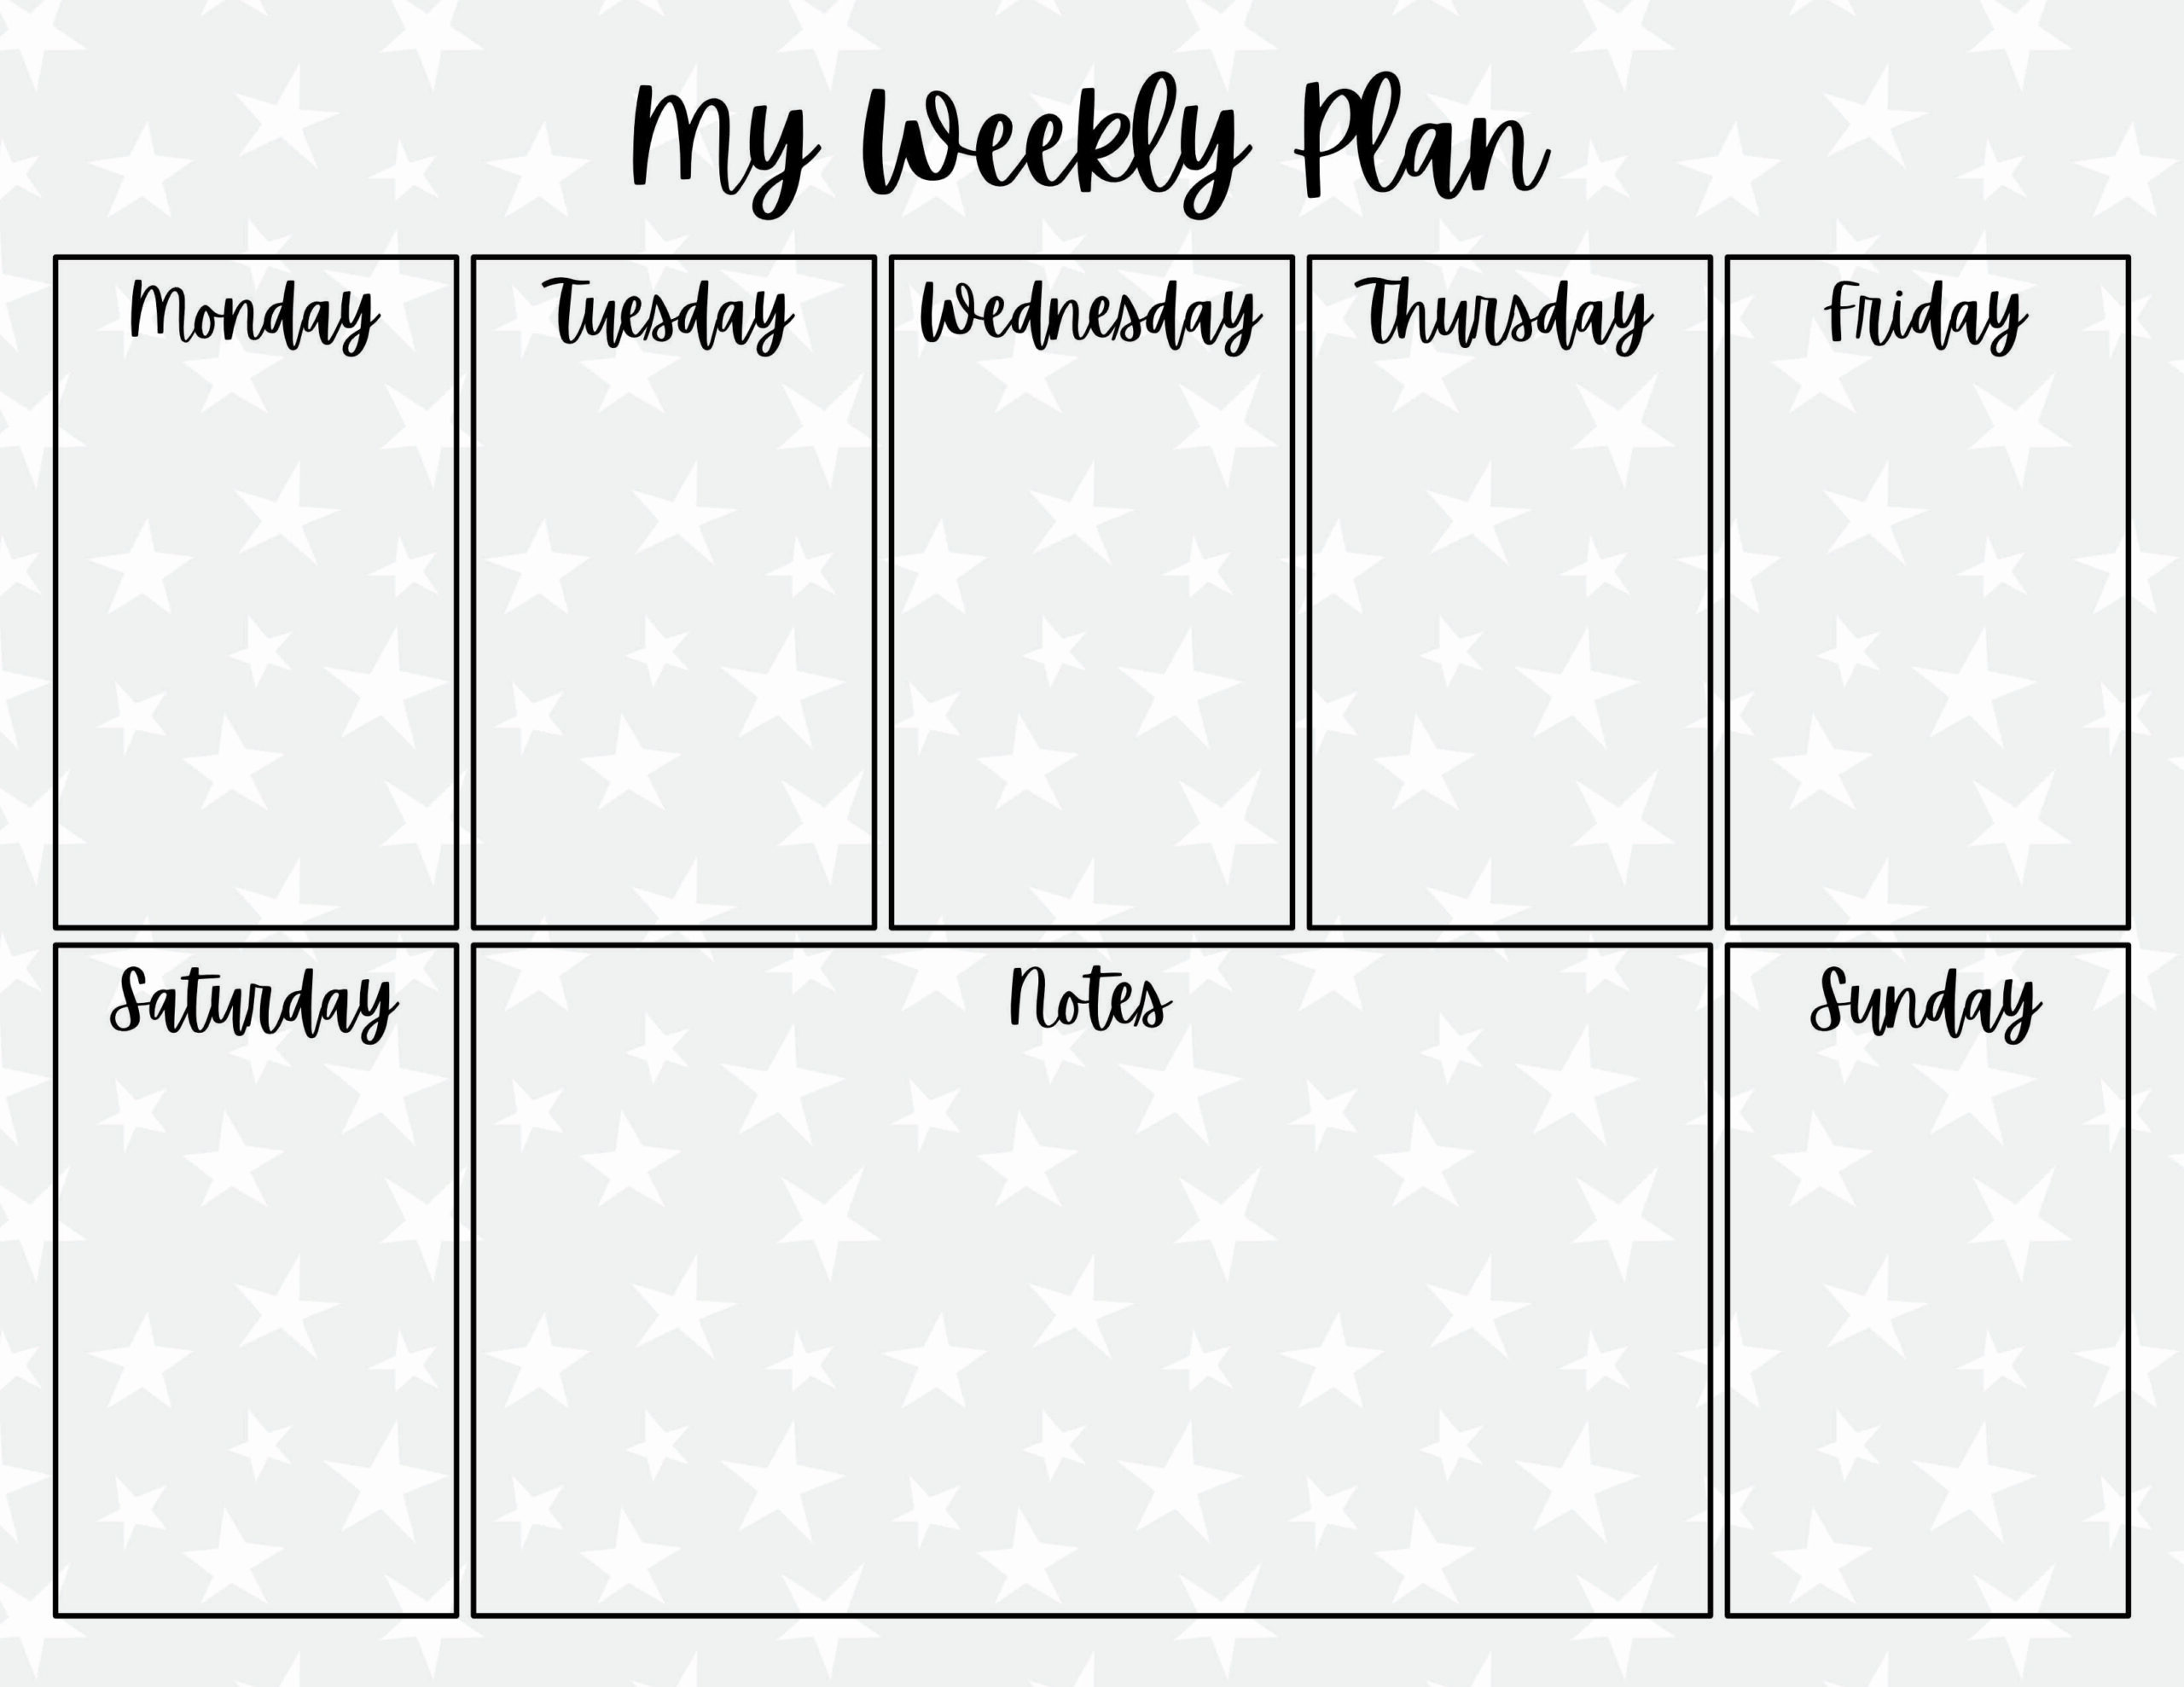 My Weekly Plan PDF